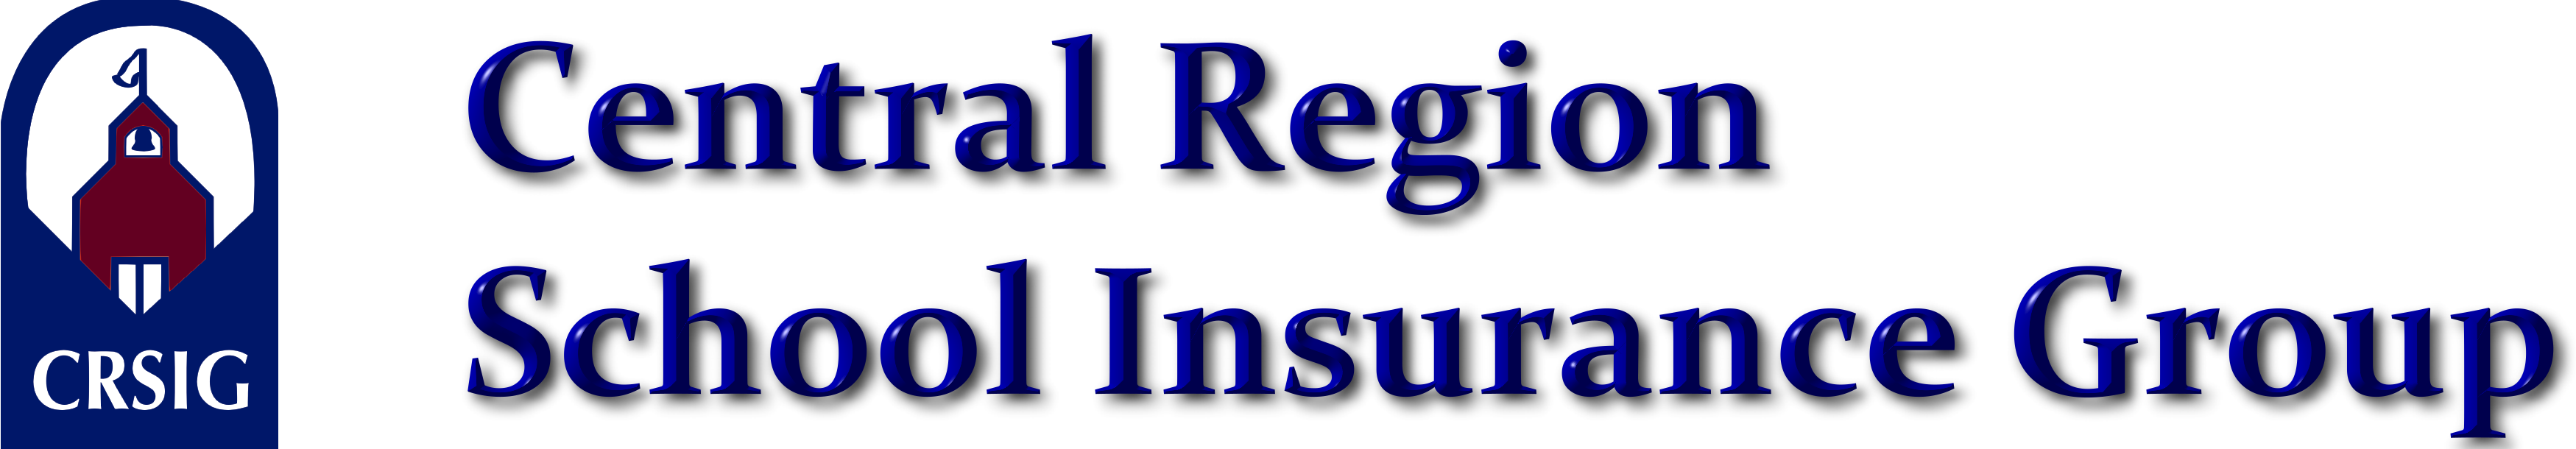 Central Region School Insurance Group Logo